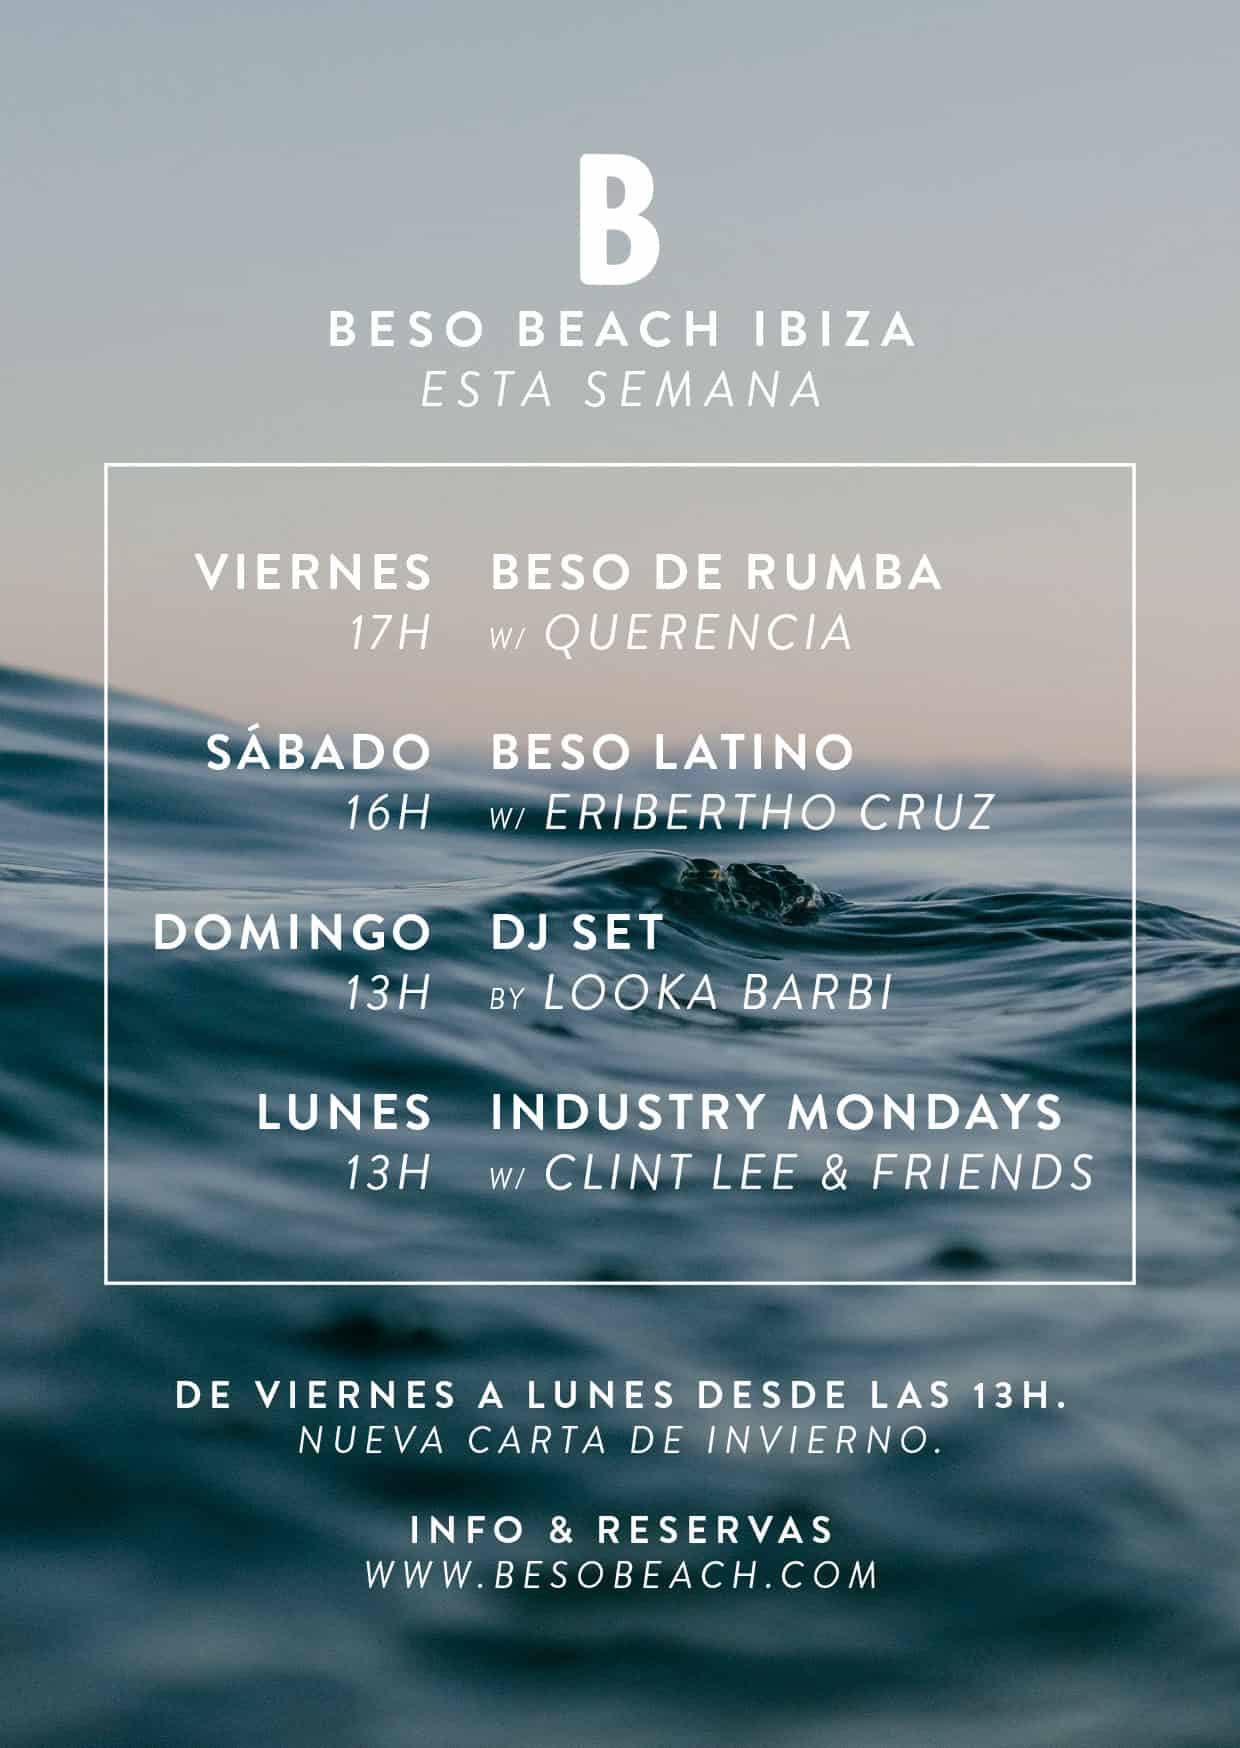 beso-beach-ibiza-programa-noviembre-2021-welcometoibiza